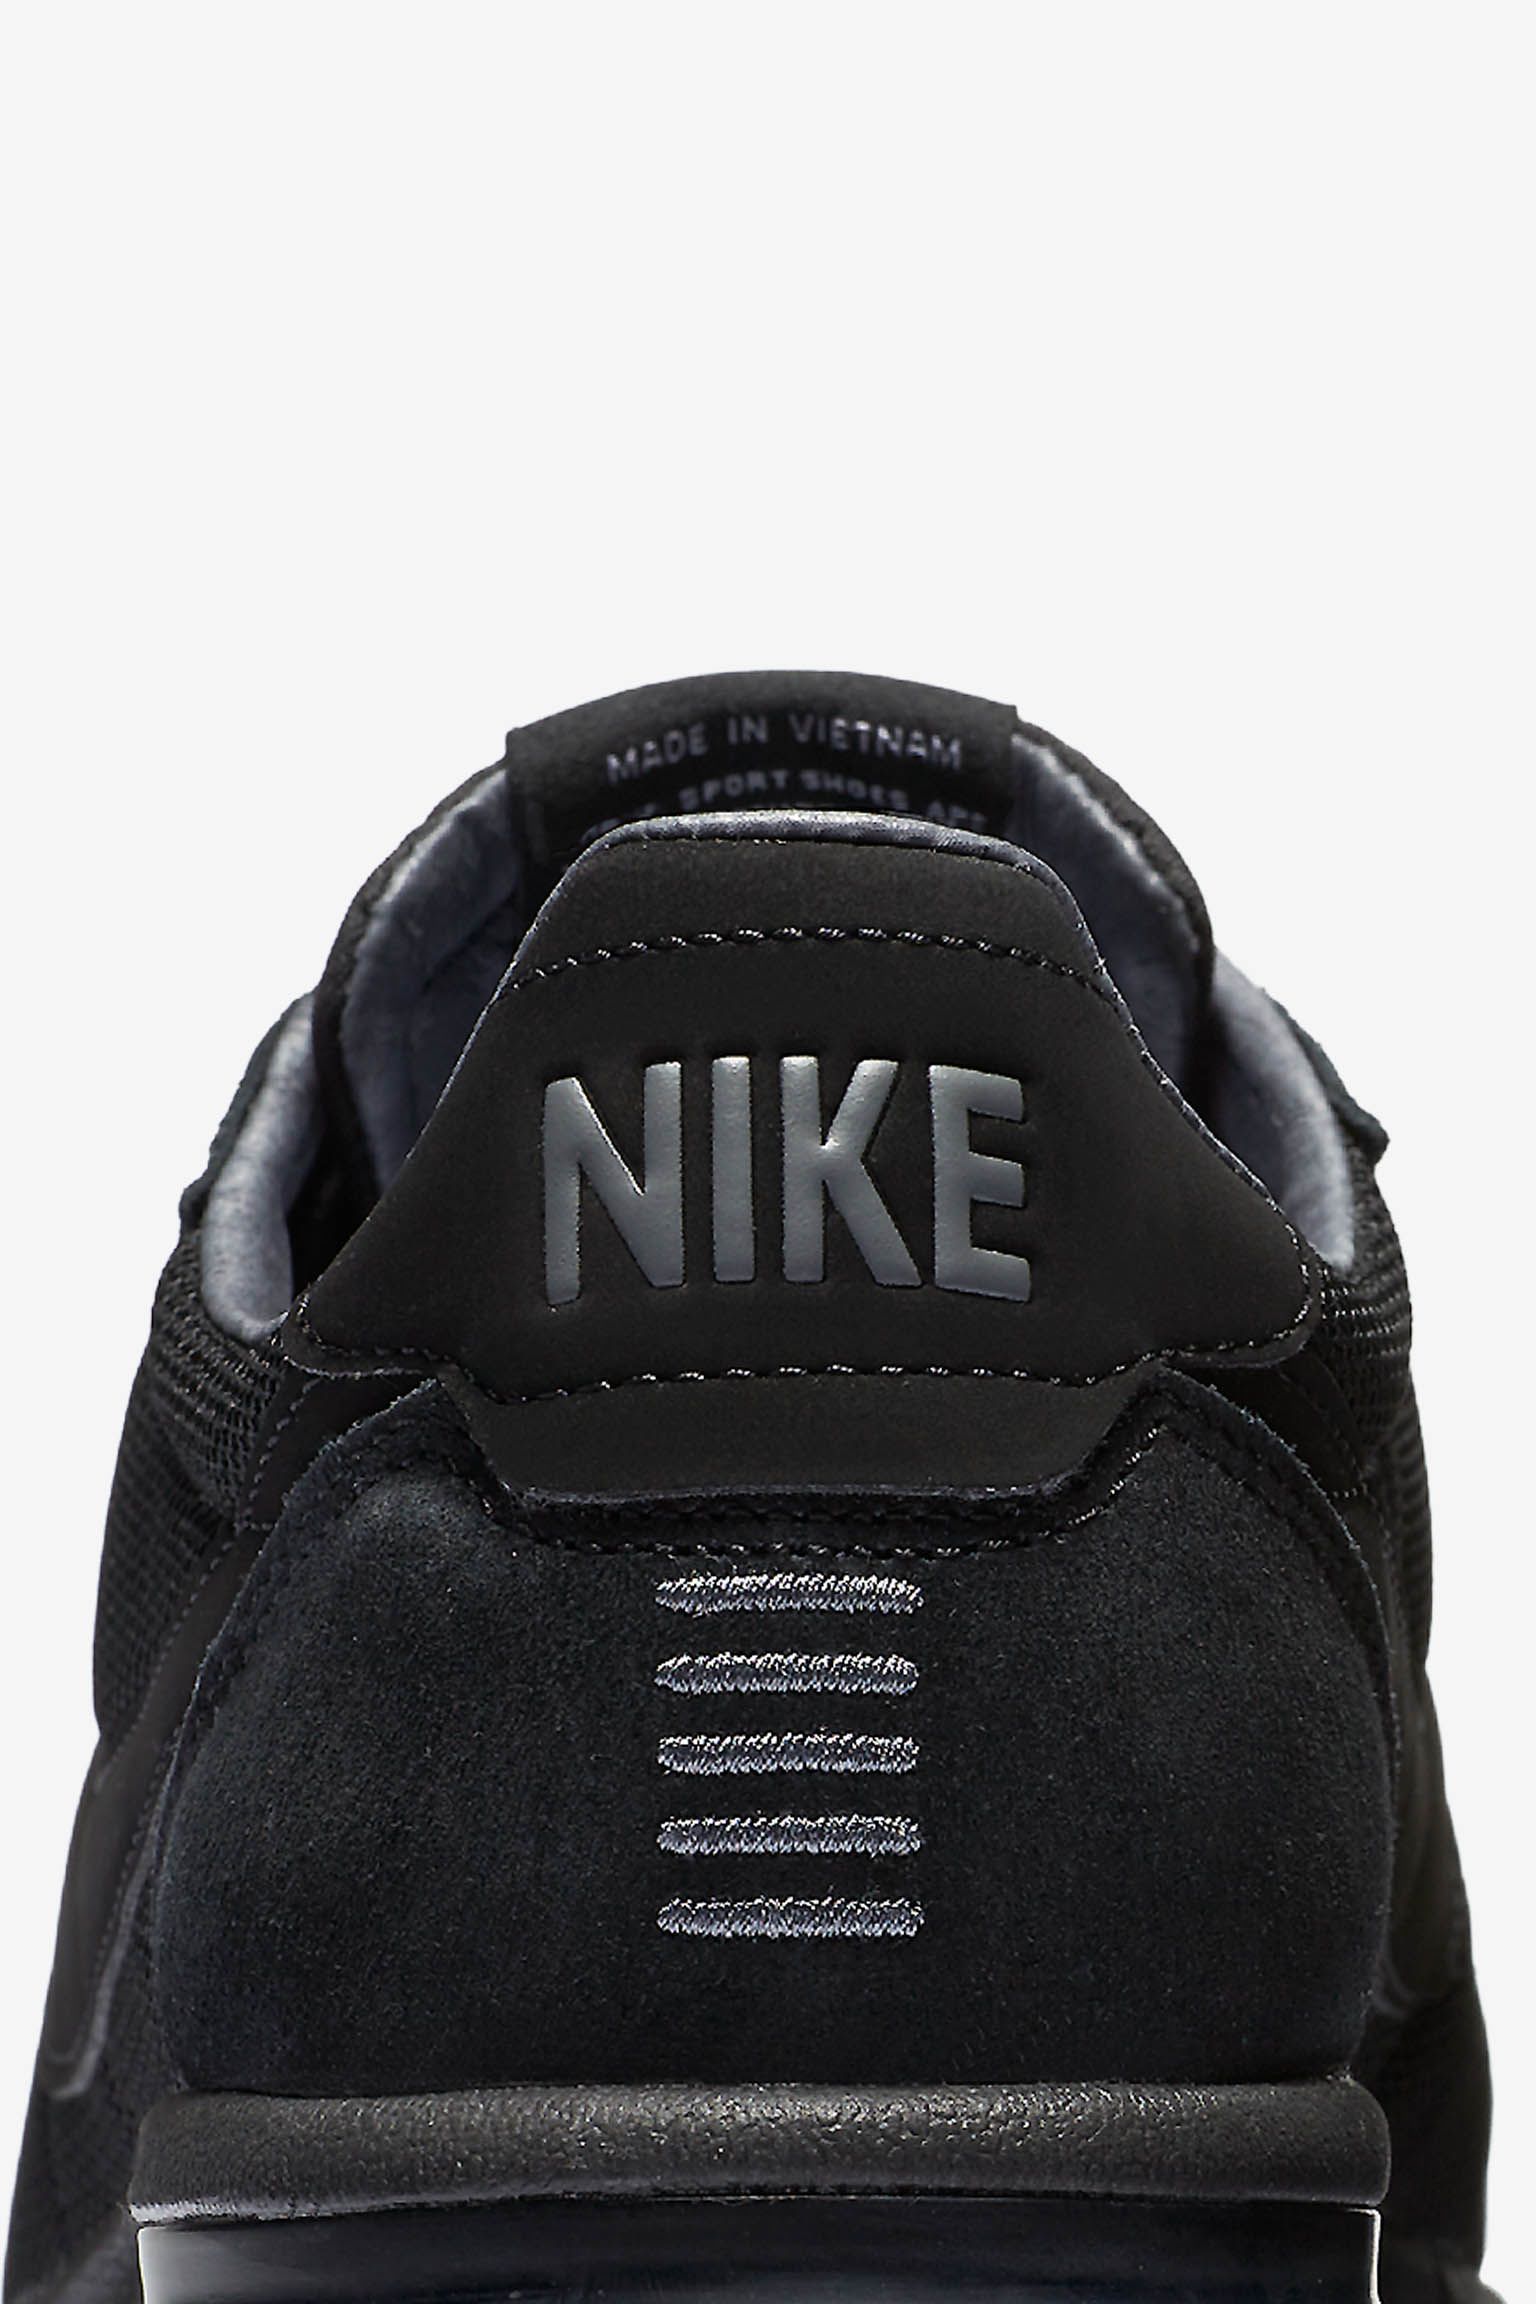 hoy Jadeo debate Nike Air Max LD-Zero "Black &amp; Dark Grey". Nike SNKRS ES